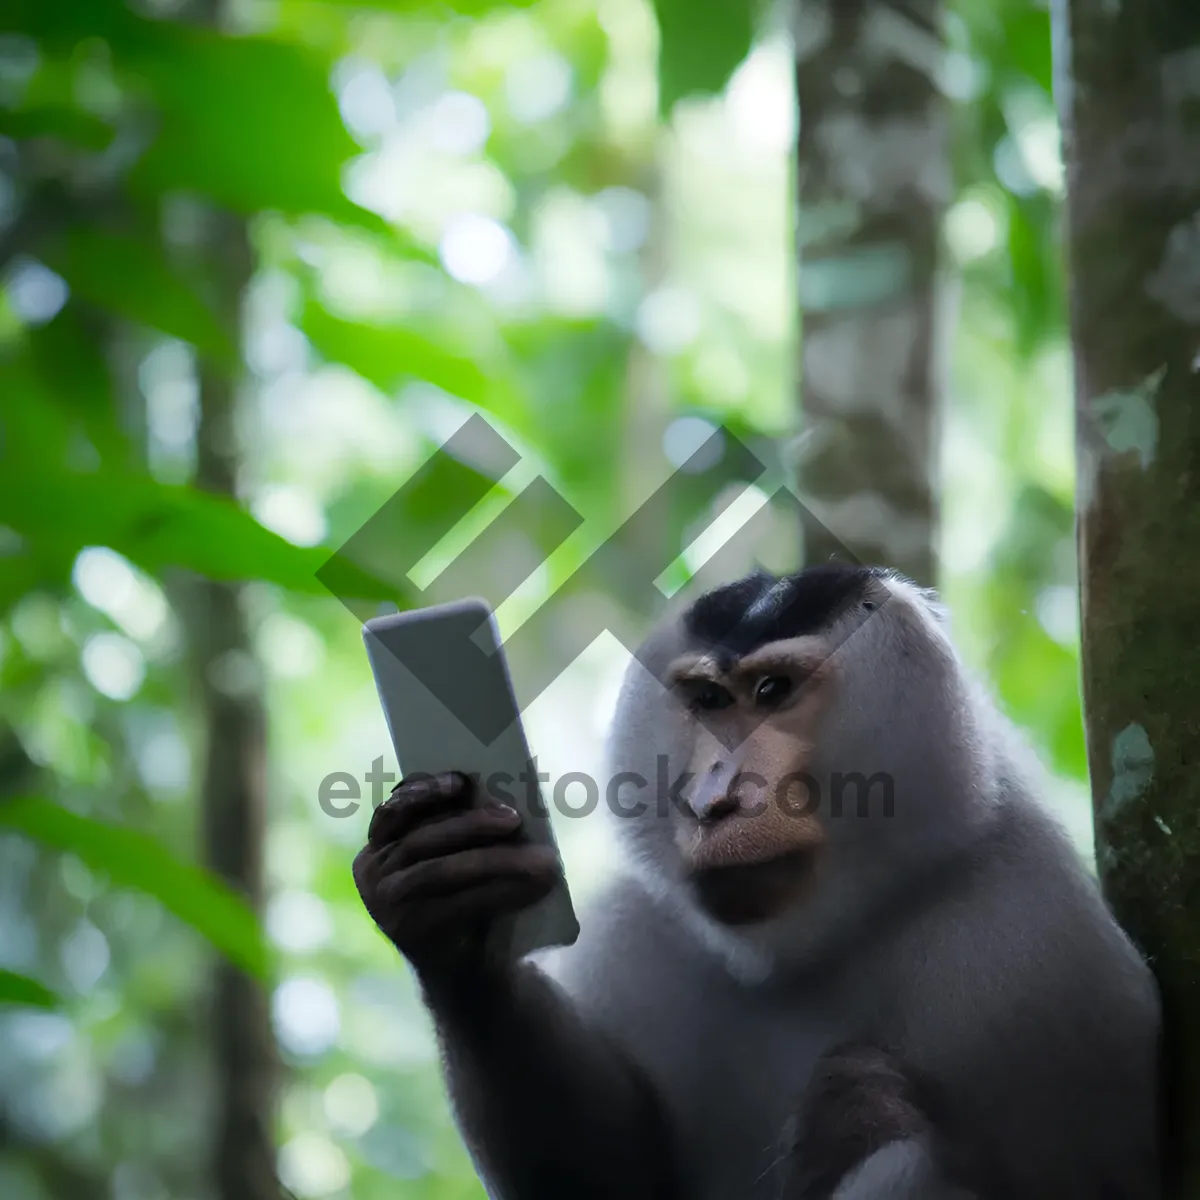 Picture of Primate jungle faces in wildlife sanctuary zoo illustration.